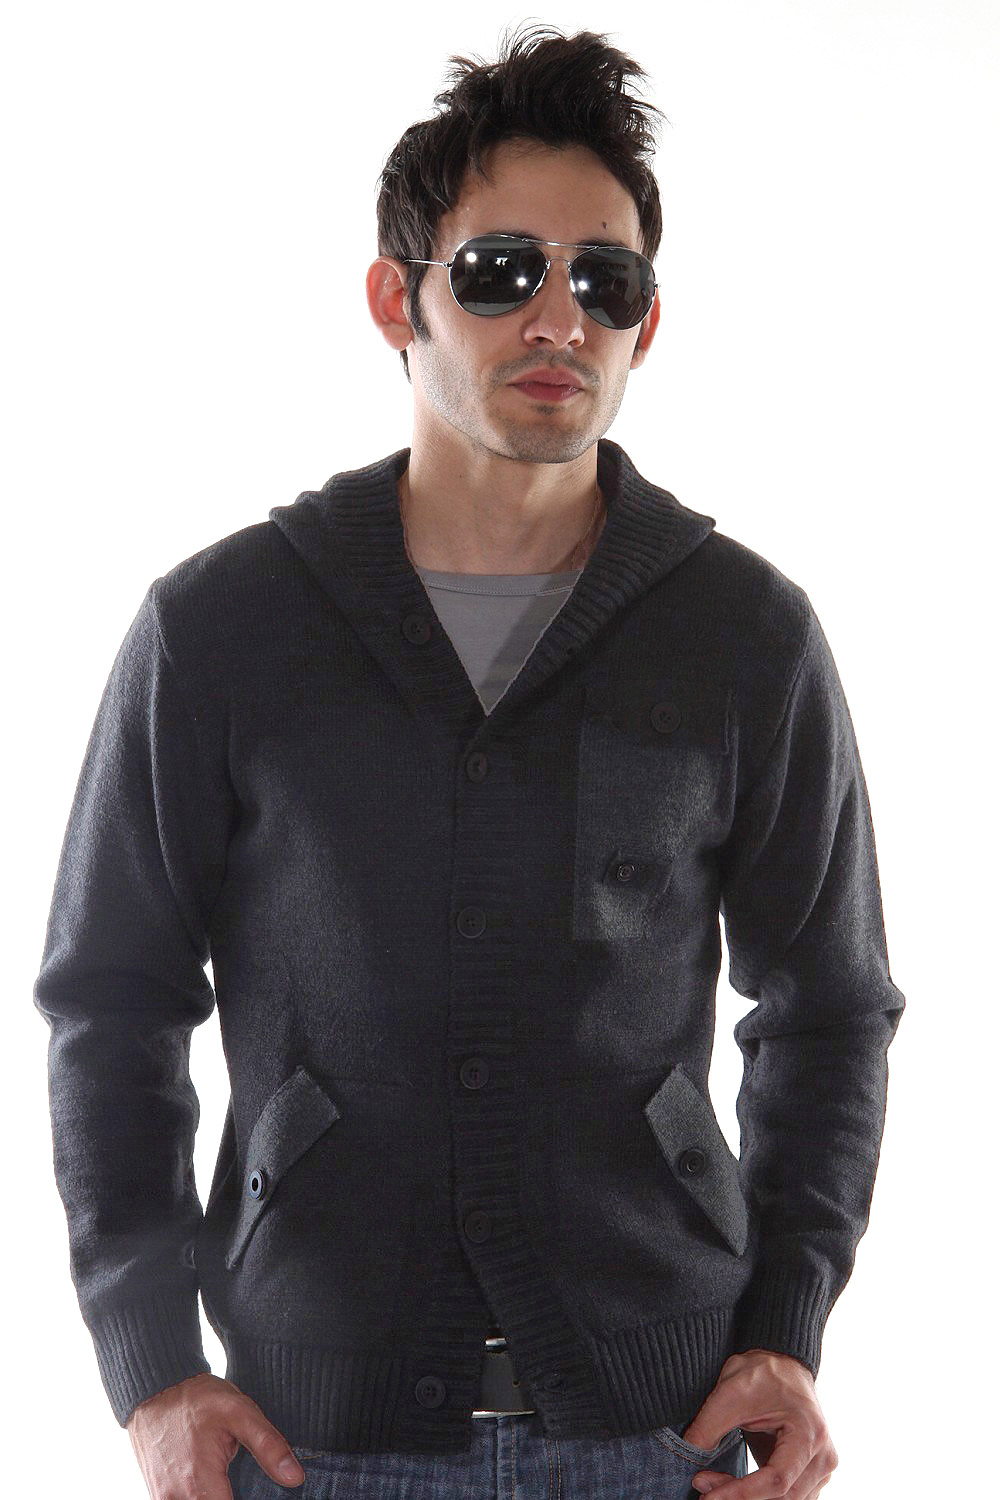 EXUMA hoodie jacket at oboy.com